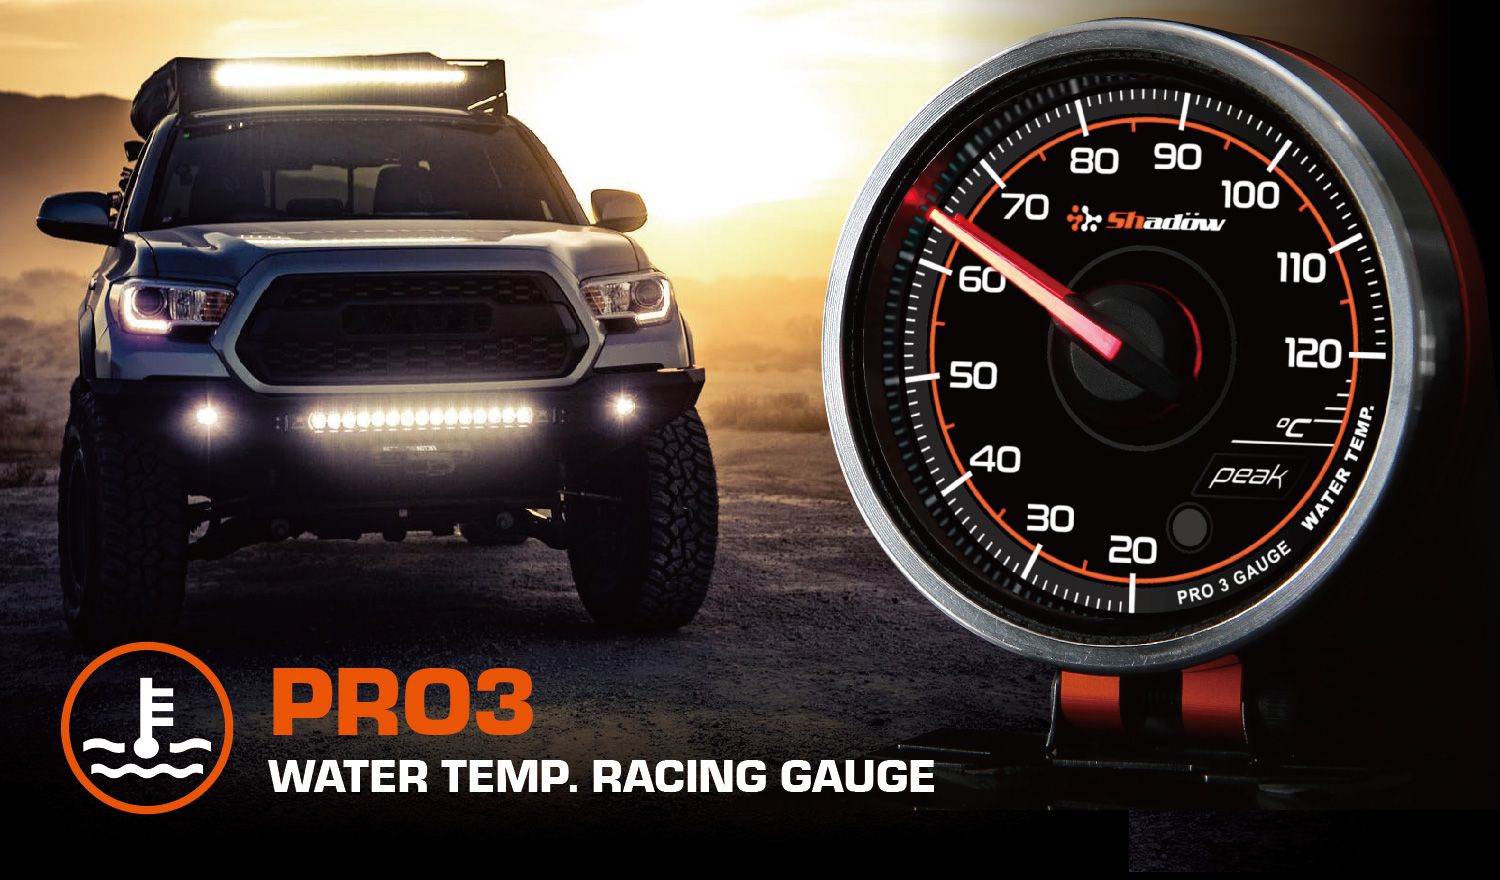 Water Temperature electronic racing gauge measurement range is from 20°C to 120°C.